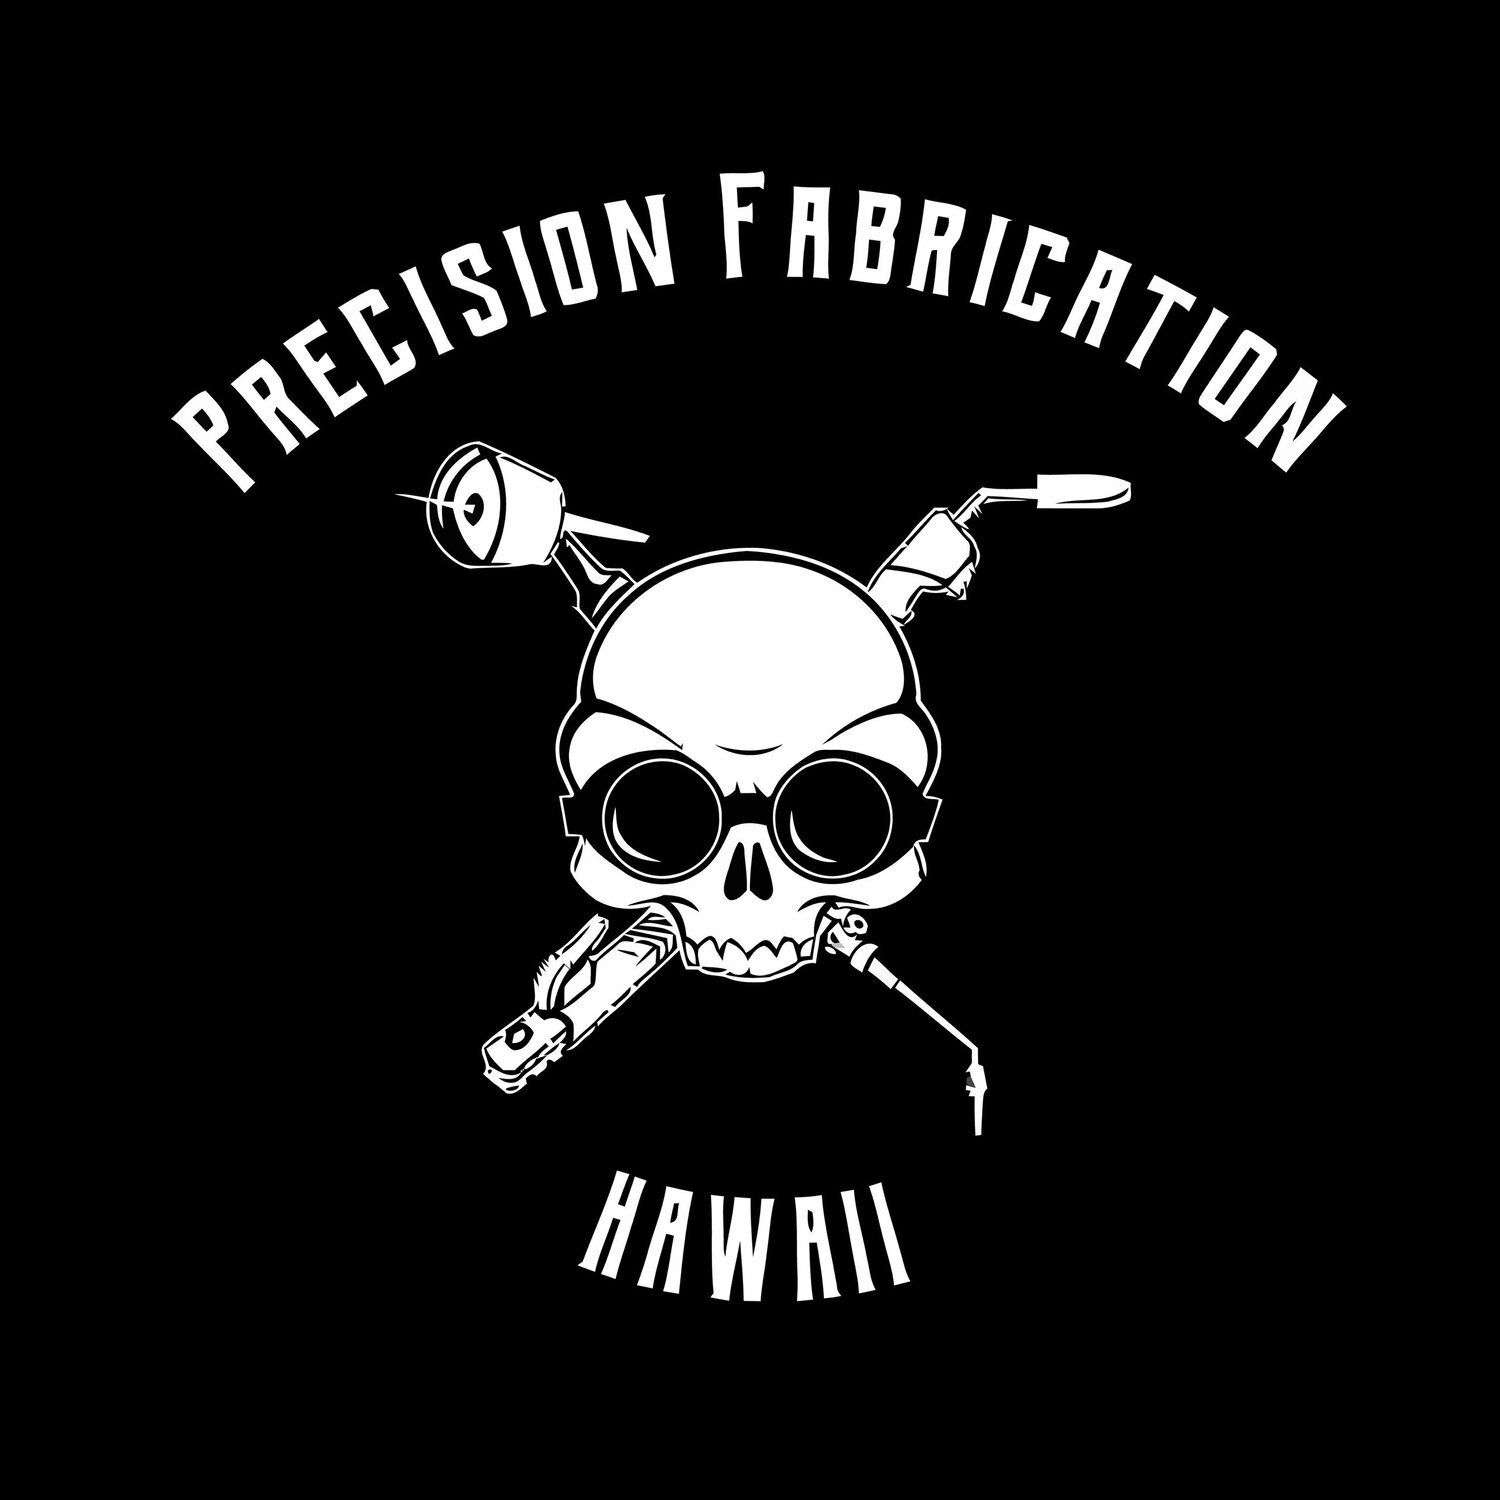 Precision Fabrication Hawaii